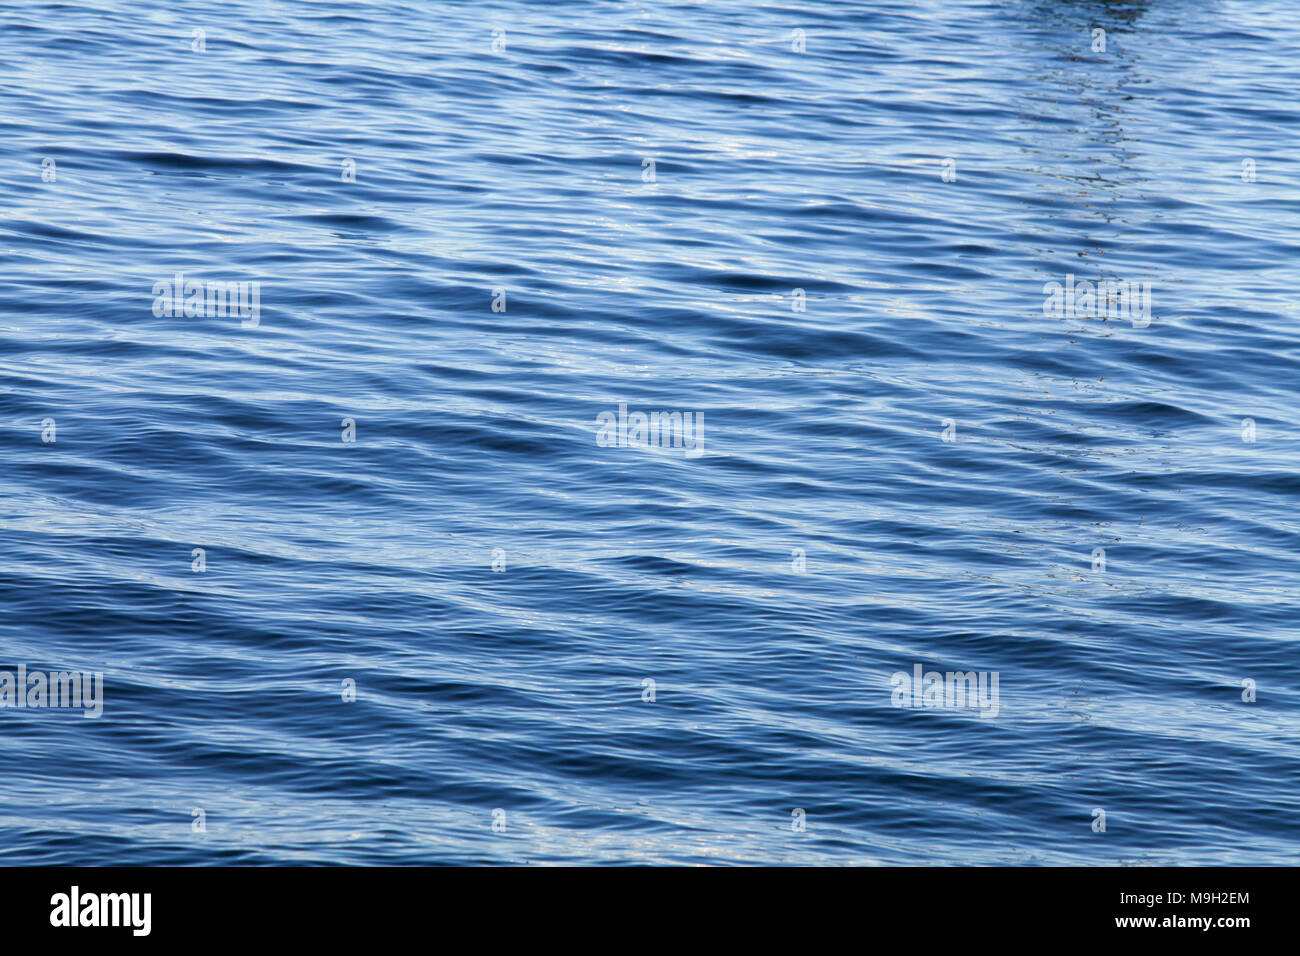 Study of water, waves Australia Stock Photo